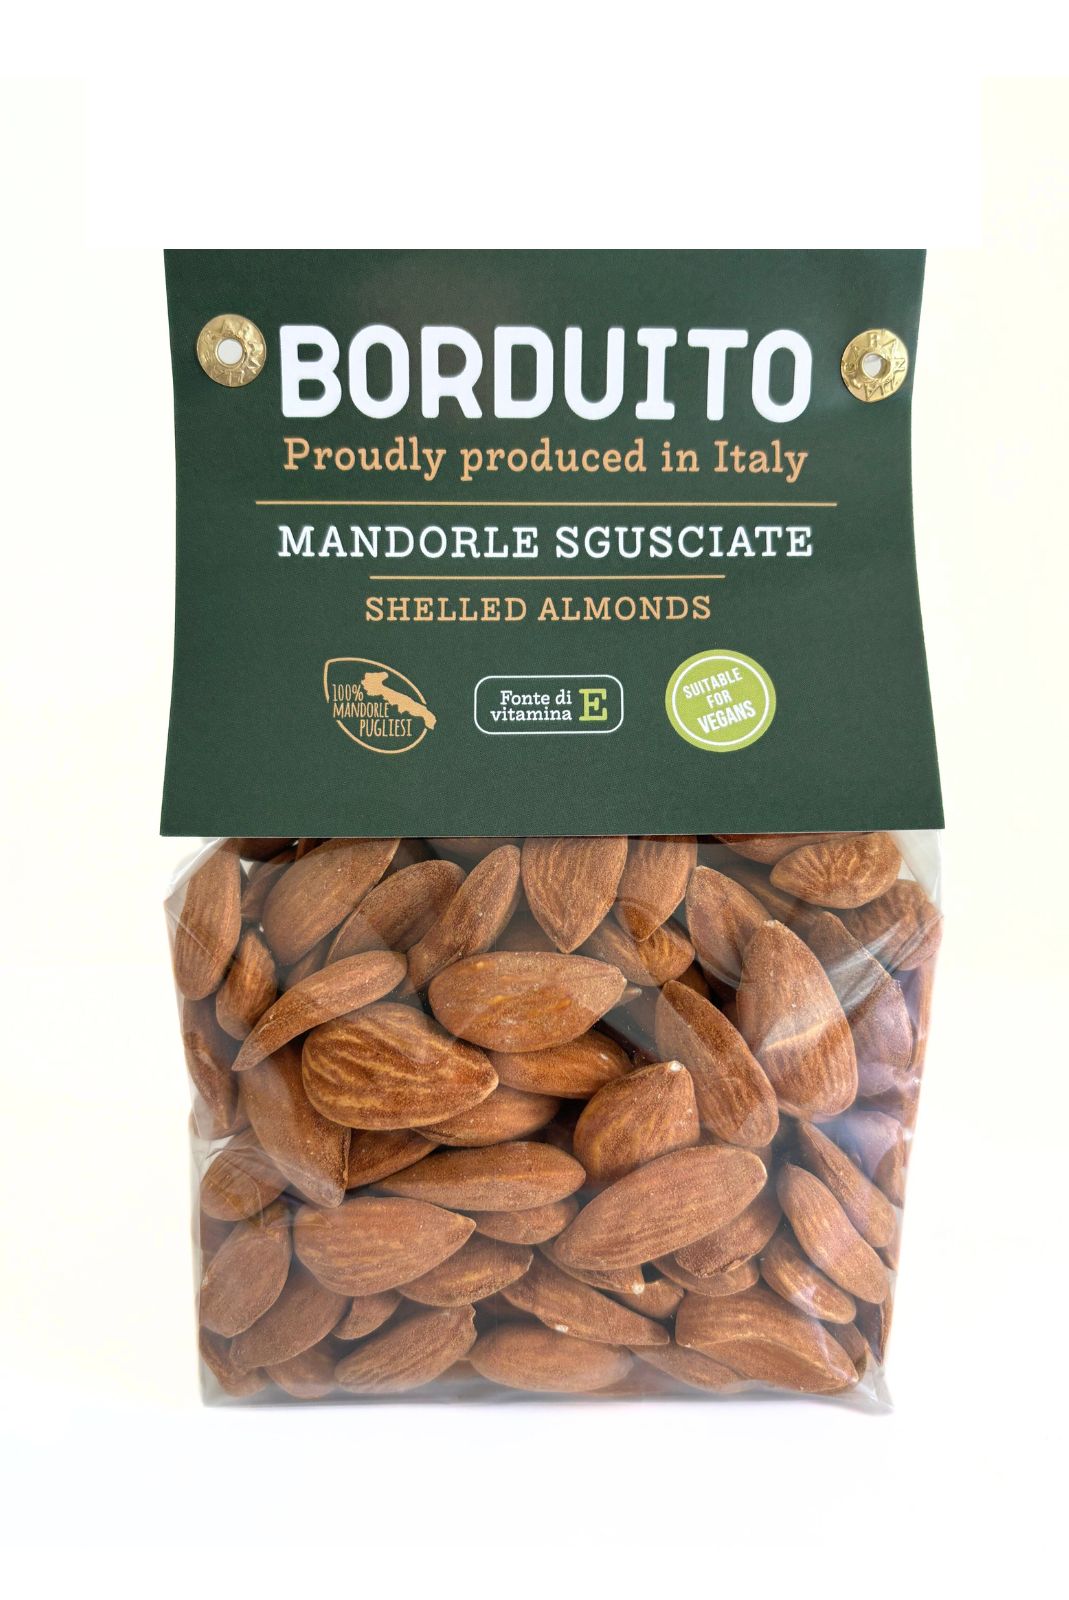 Borduito_mandorle sgusciate shelled almonds